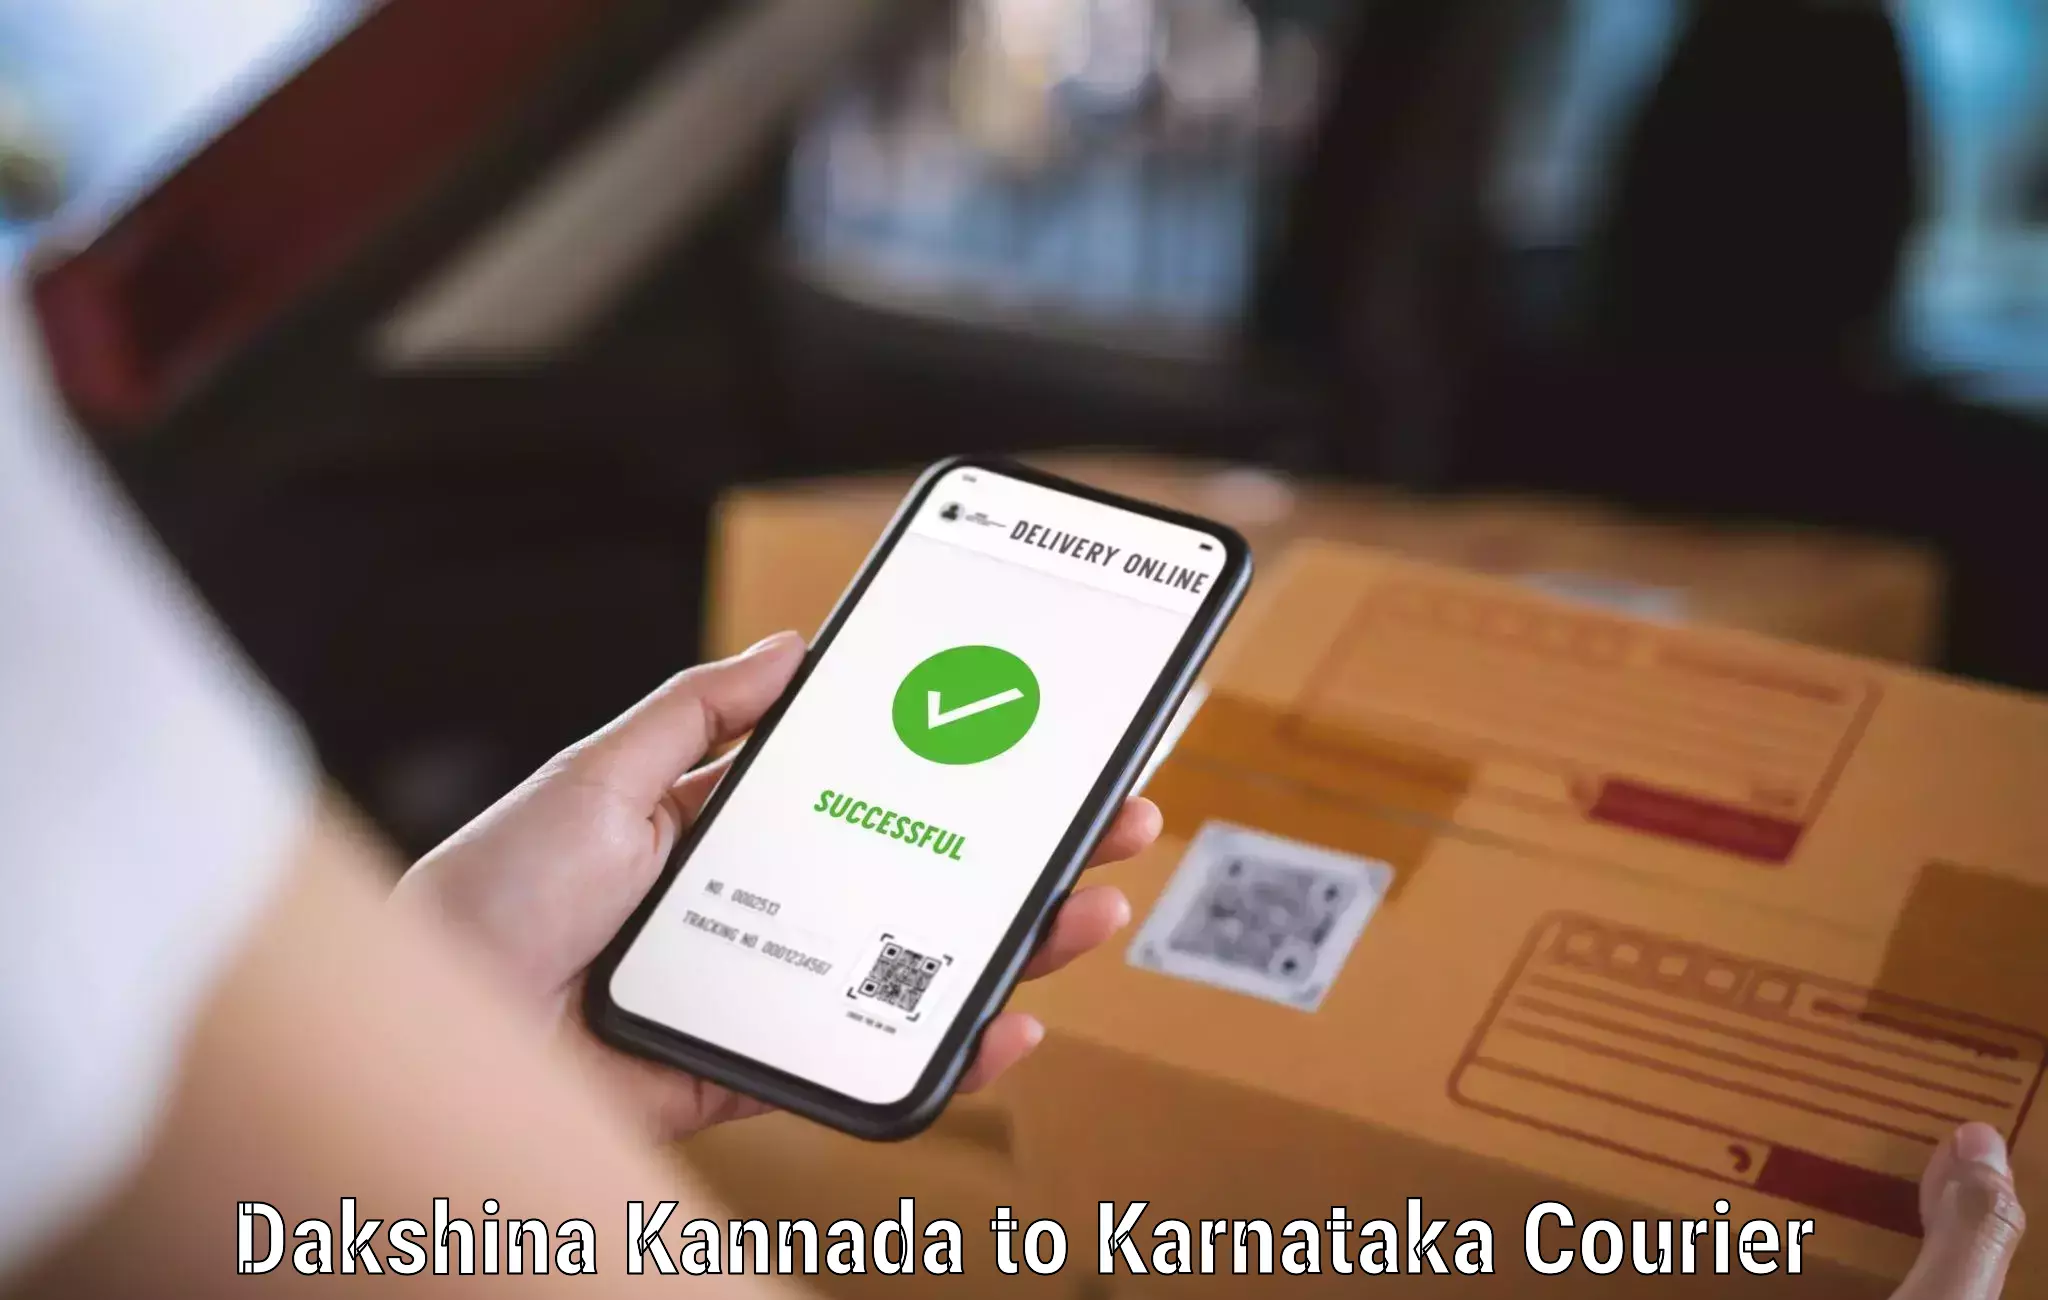 Subscription-based courier Dakshina Kannada to Eedu